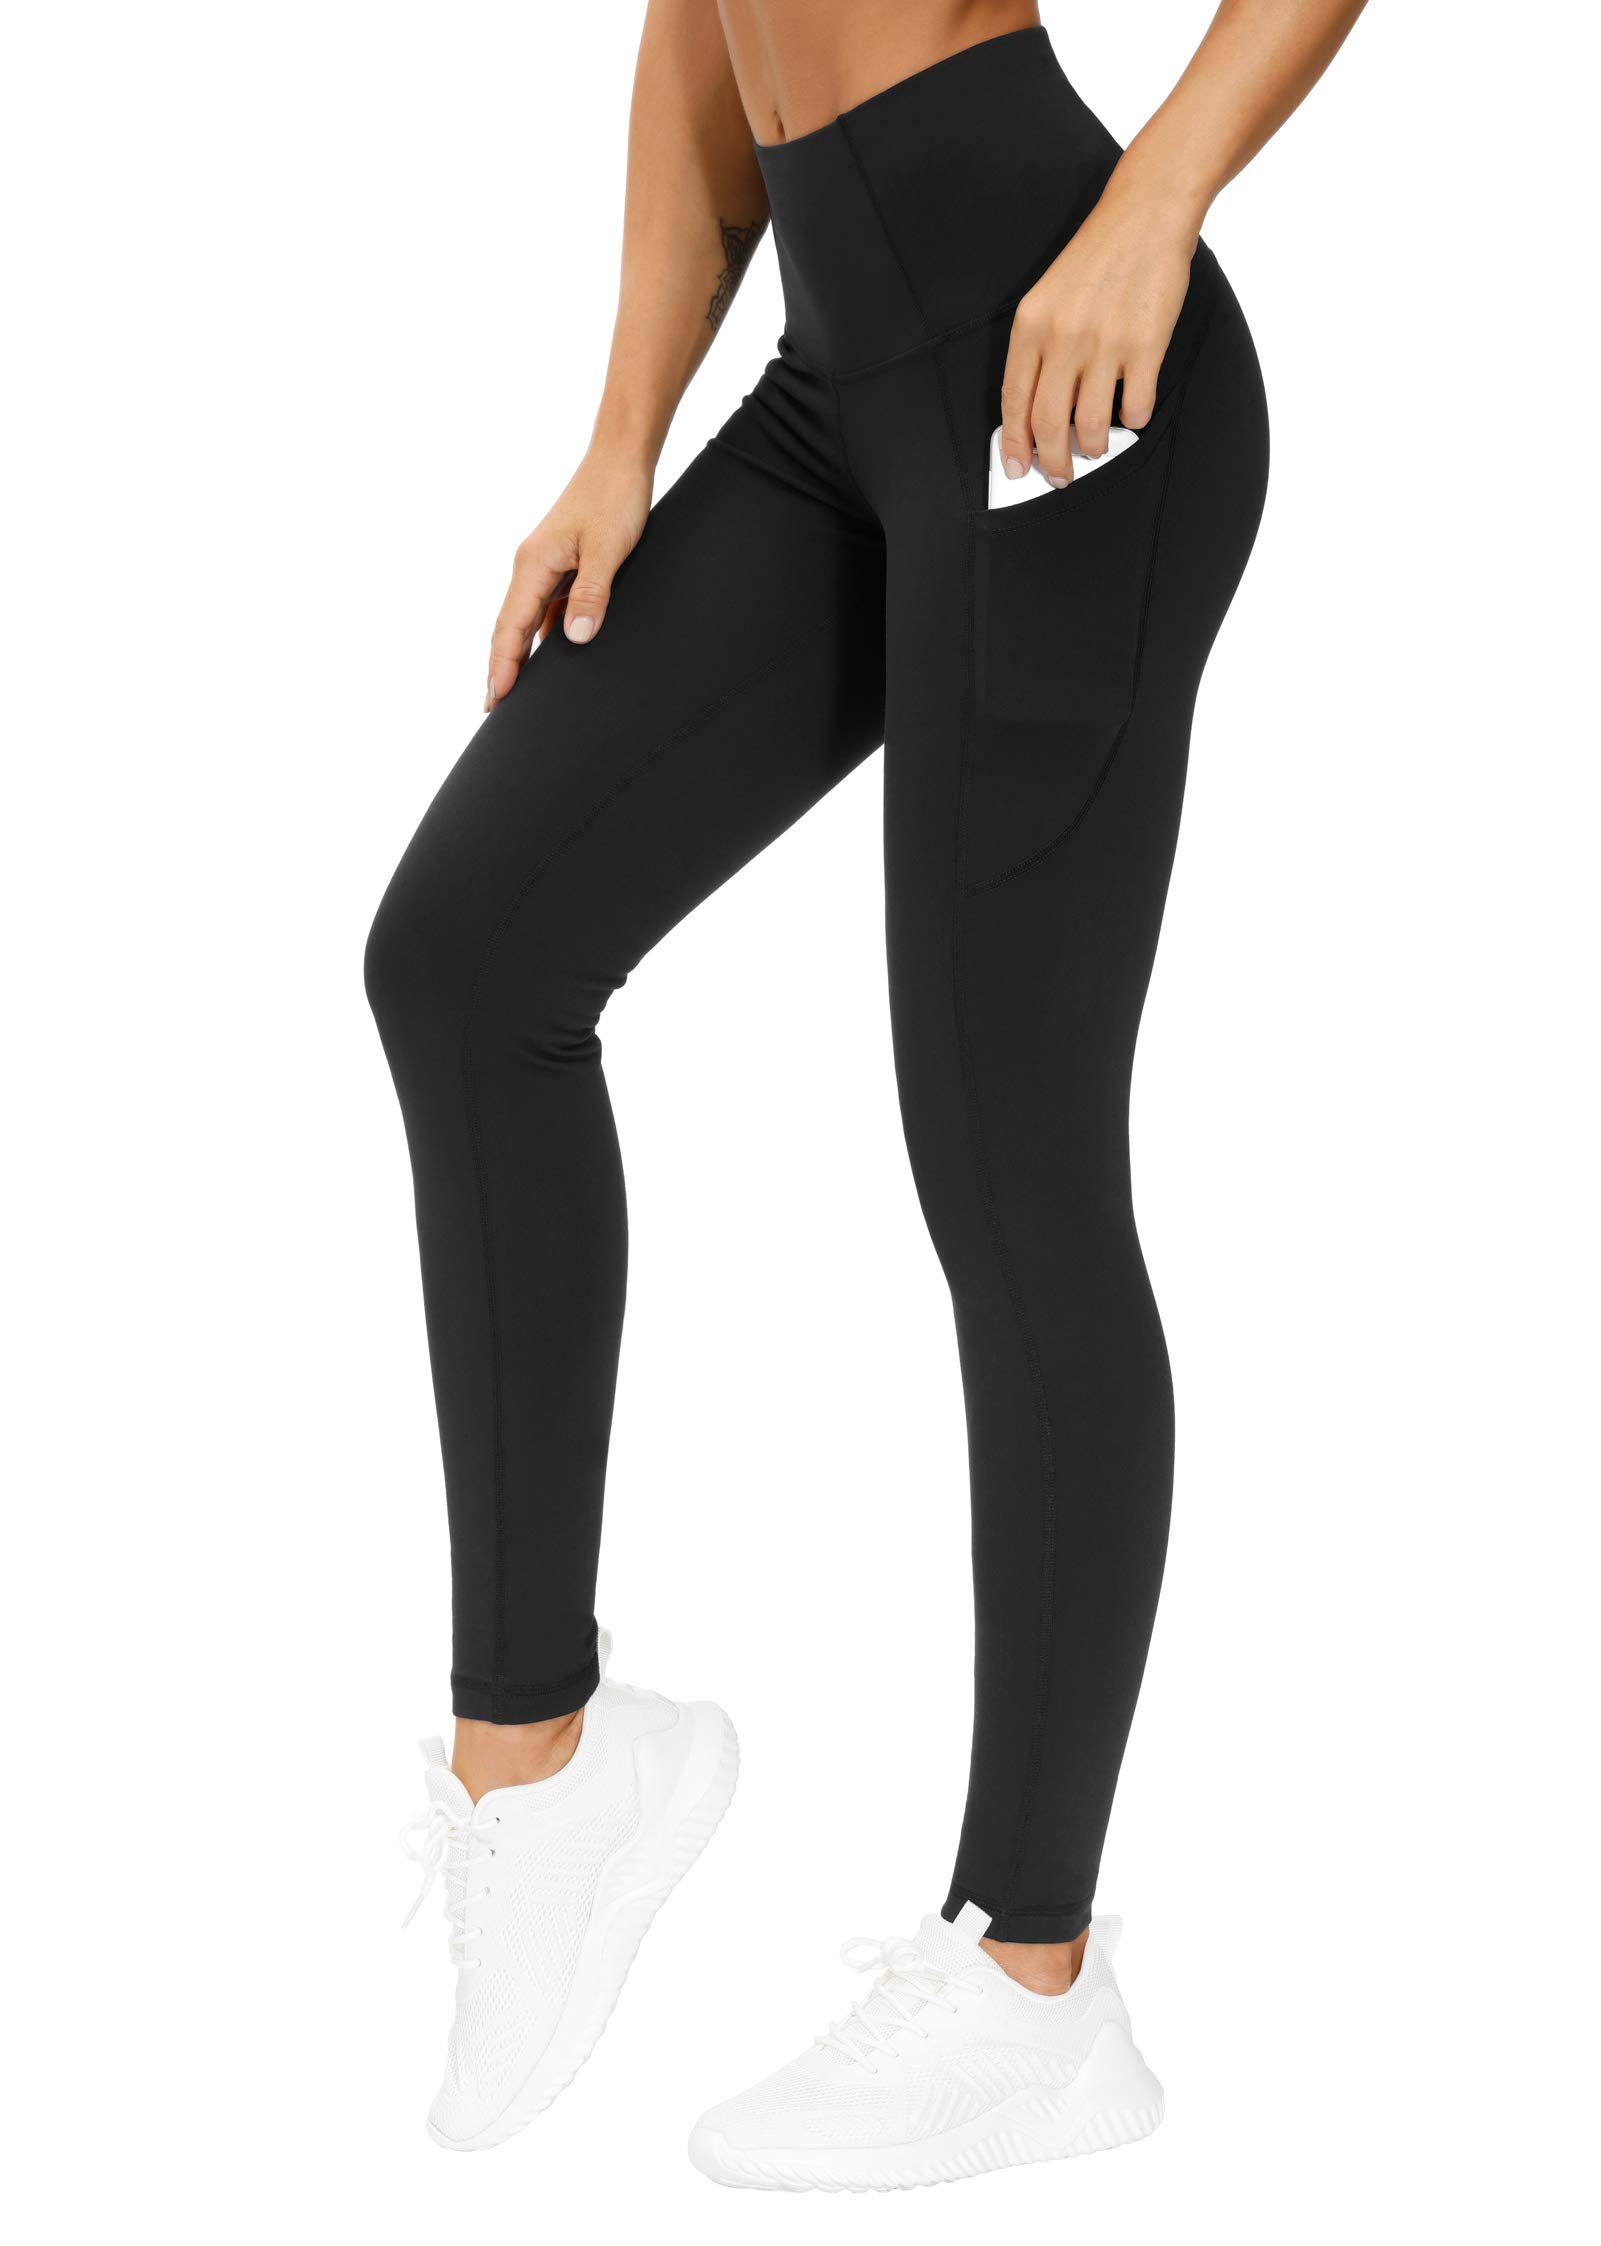 Black Workout Leggings with Back Pockets - Women's Yoga Pants